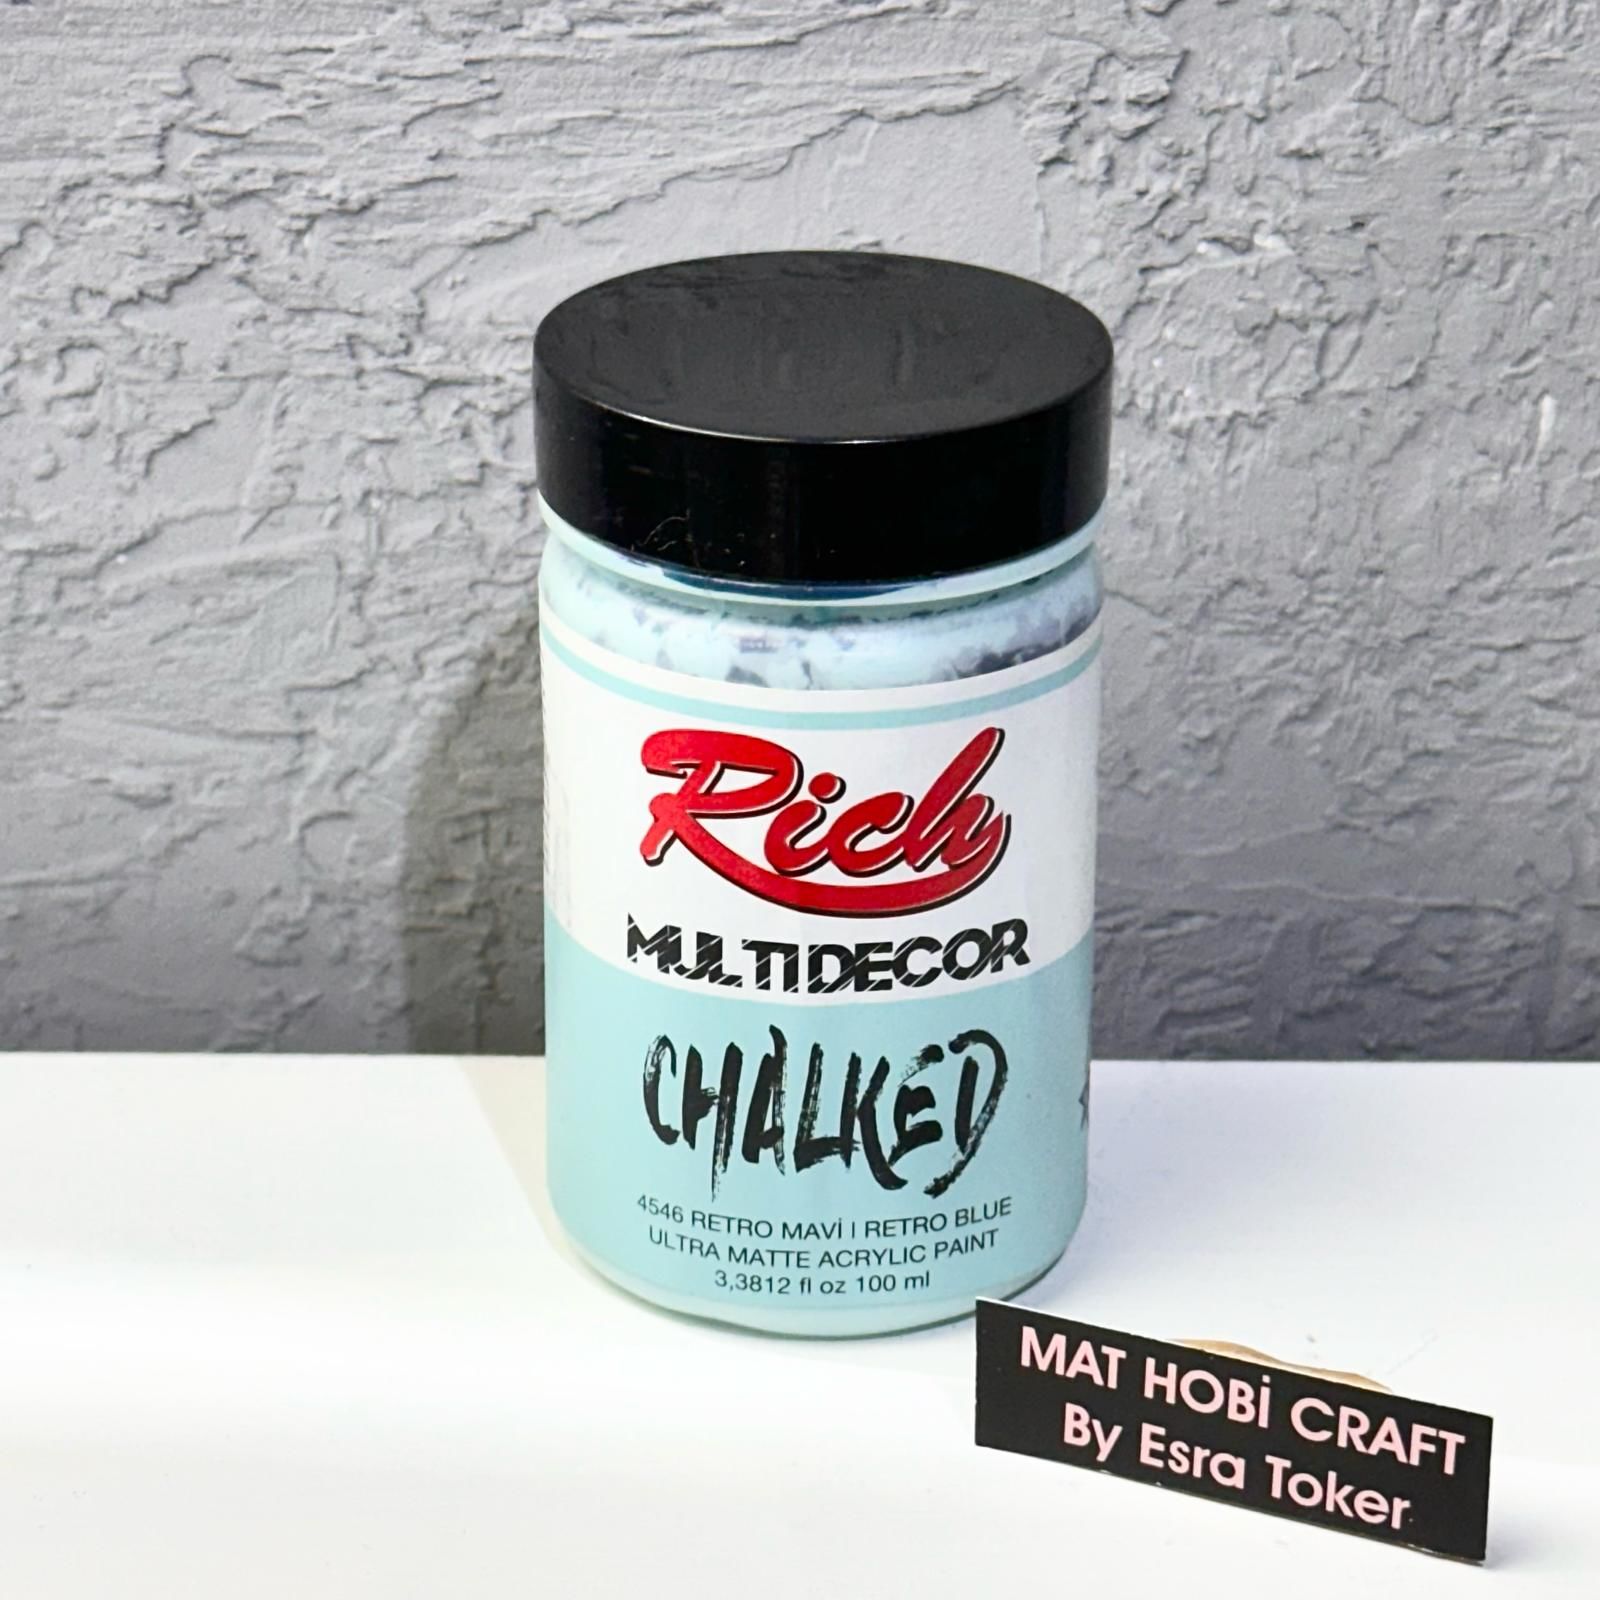 Multidecor Chalked - 4546 Retro Mavi 100 ml